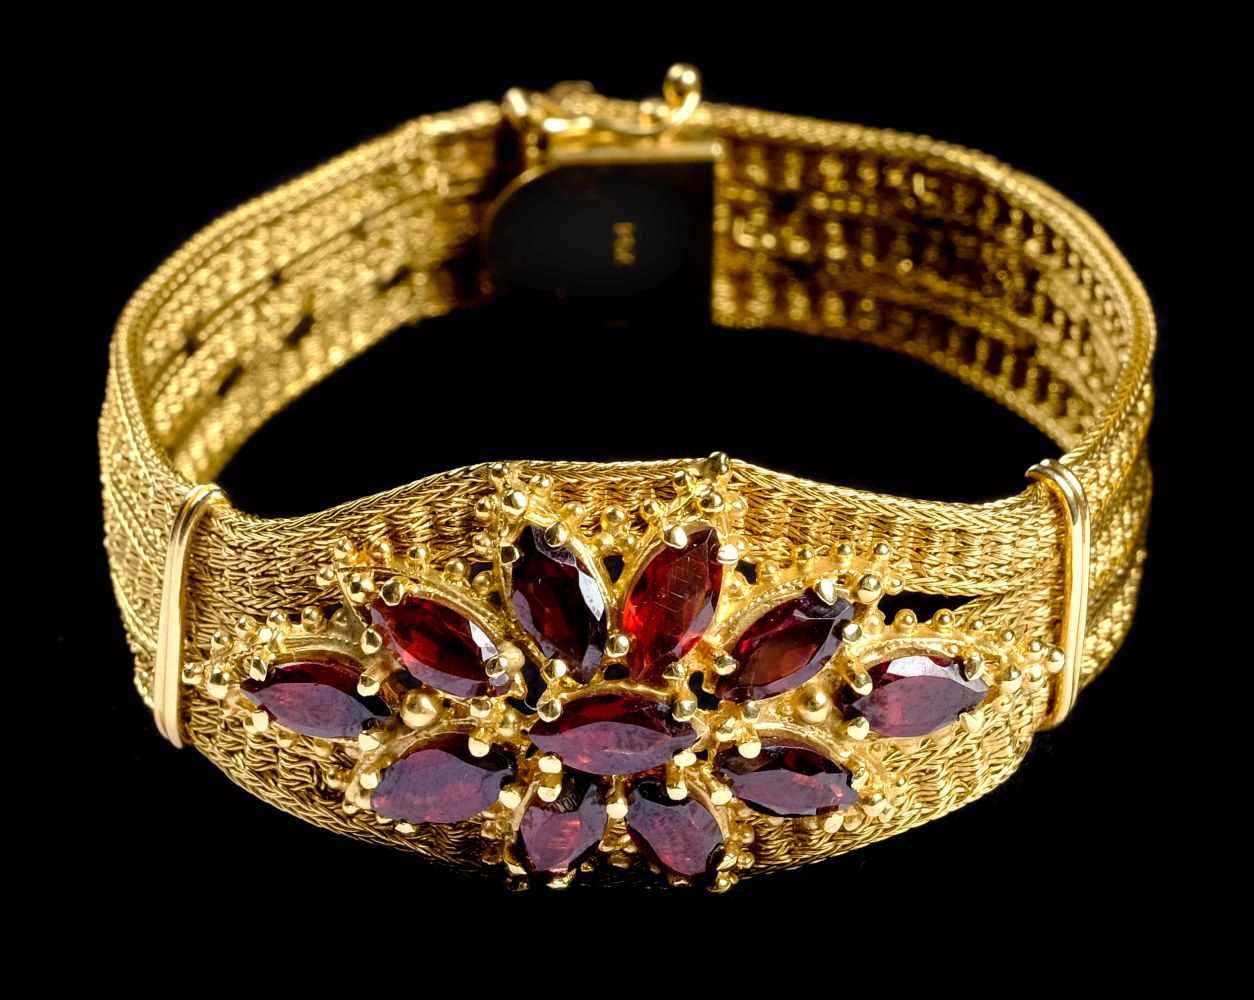 Lot 4 - Bracelet. A Continental 14K gold ladies bracelet